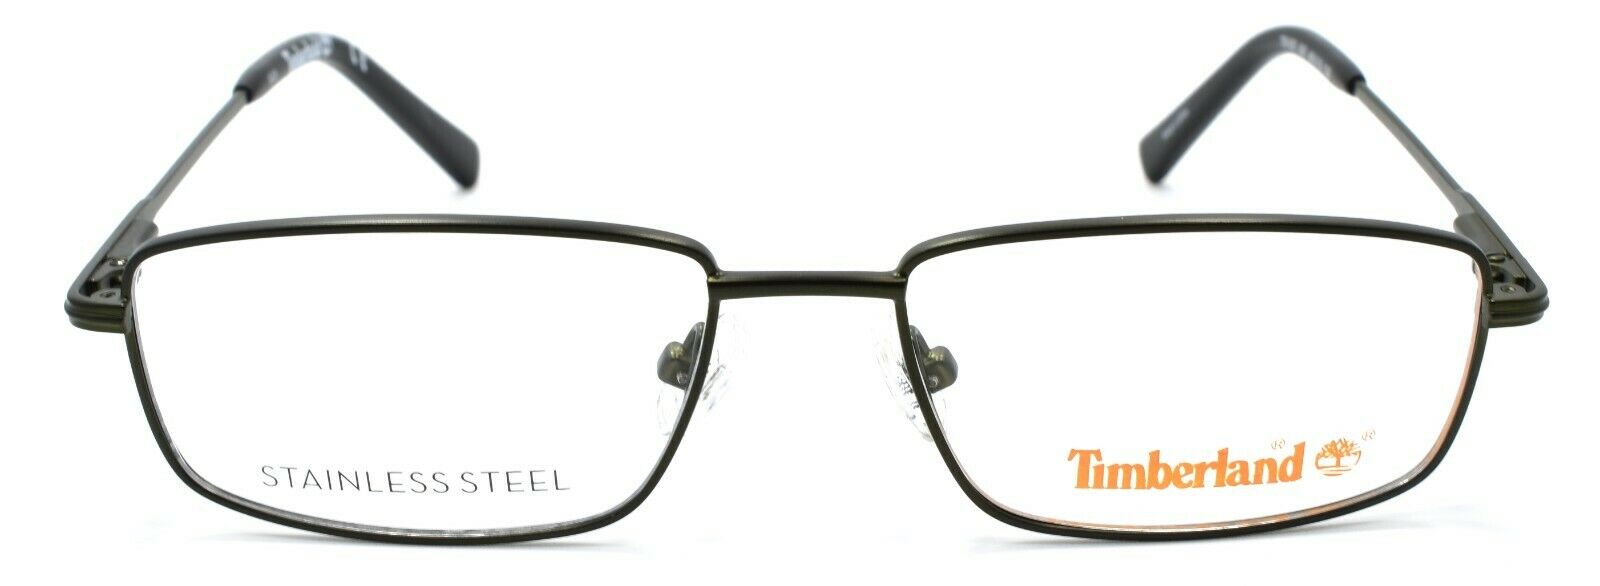 2-TIMBERLAND TB1607 097 Kids Eyeglasses Frames 48-15-135 Matte Dark Green-664689990405-IKSpecs